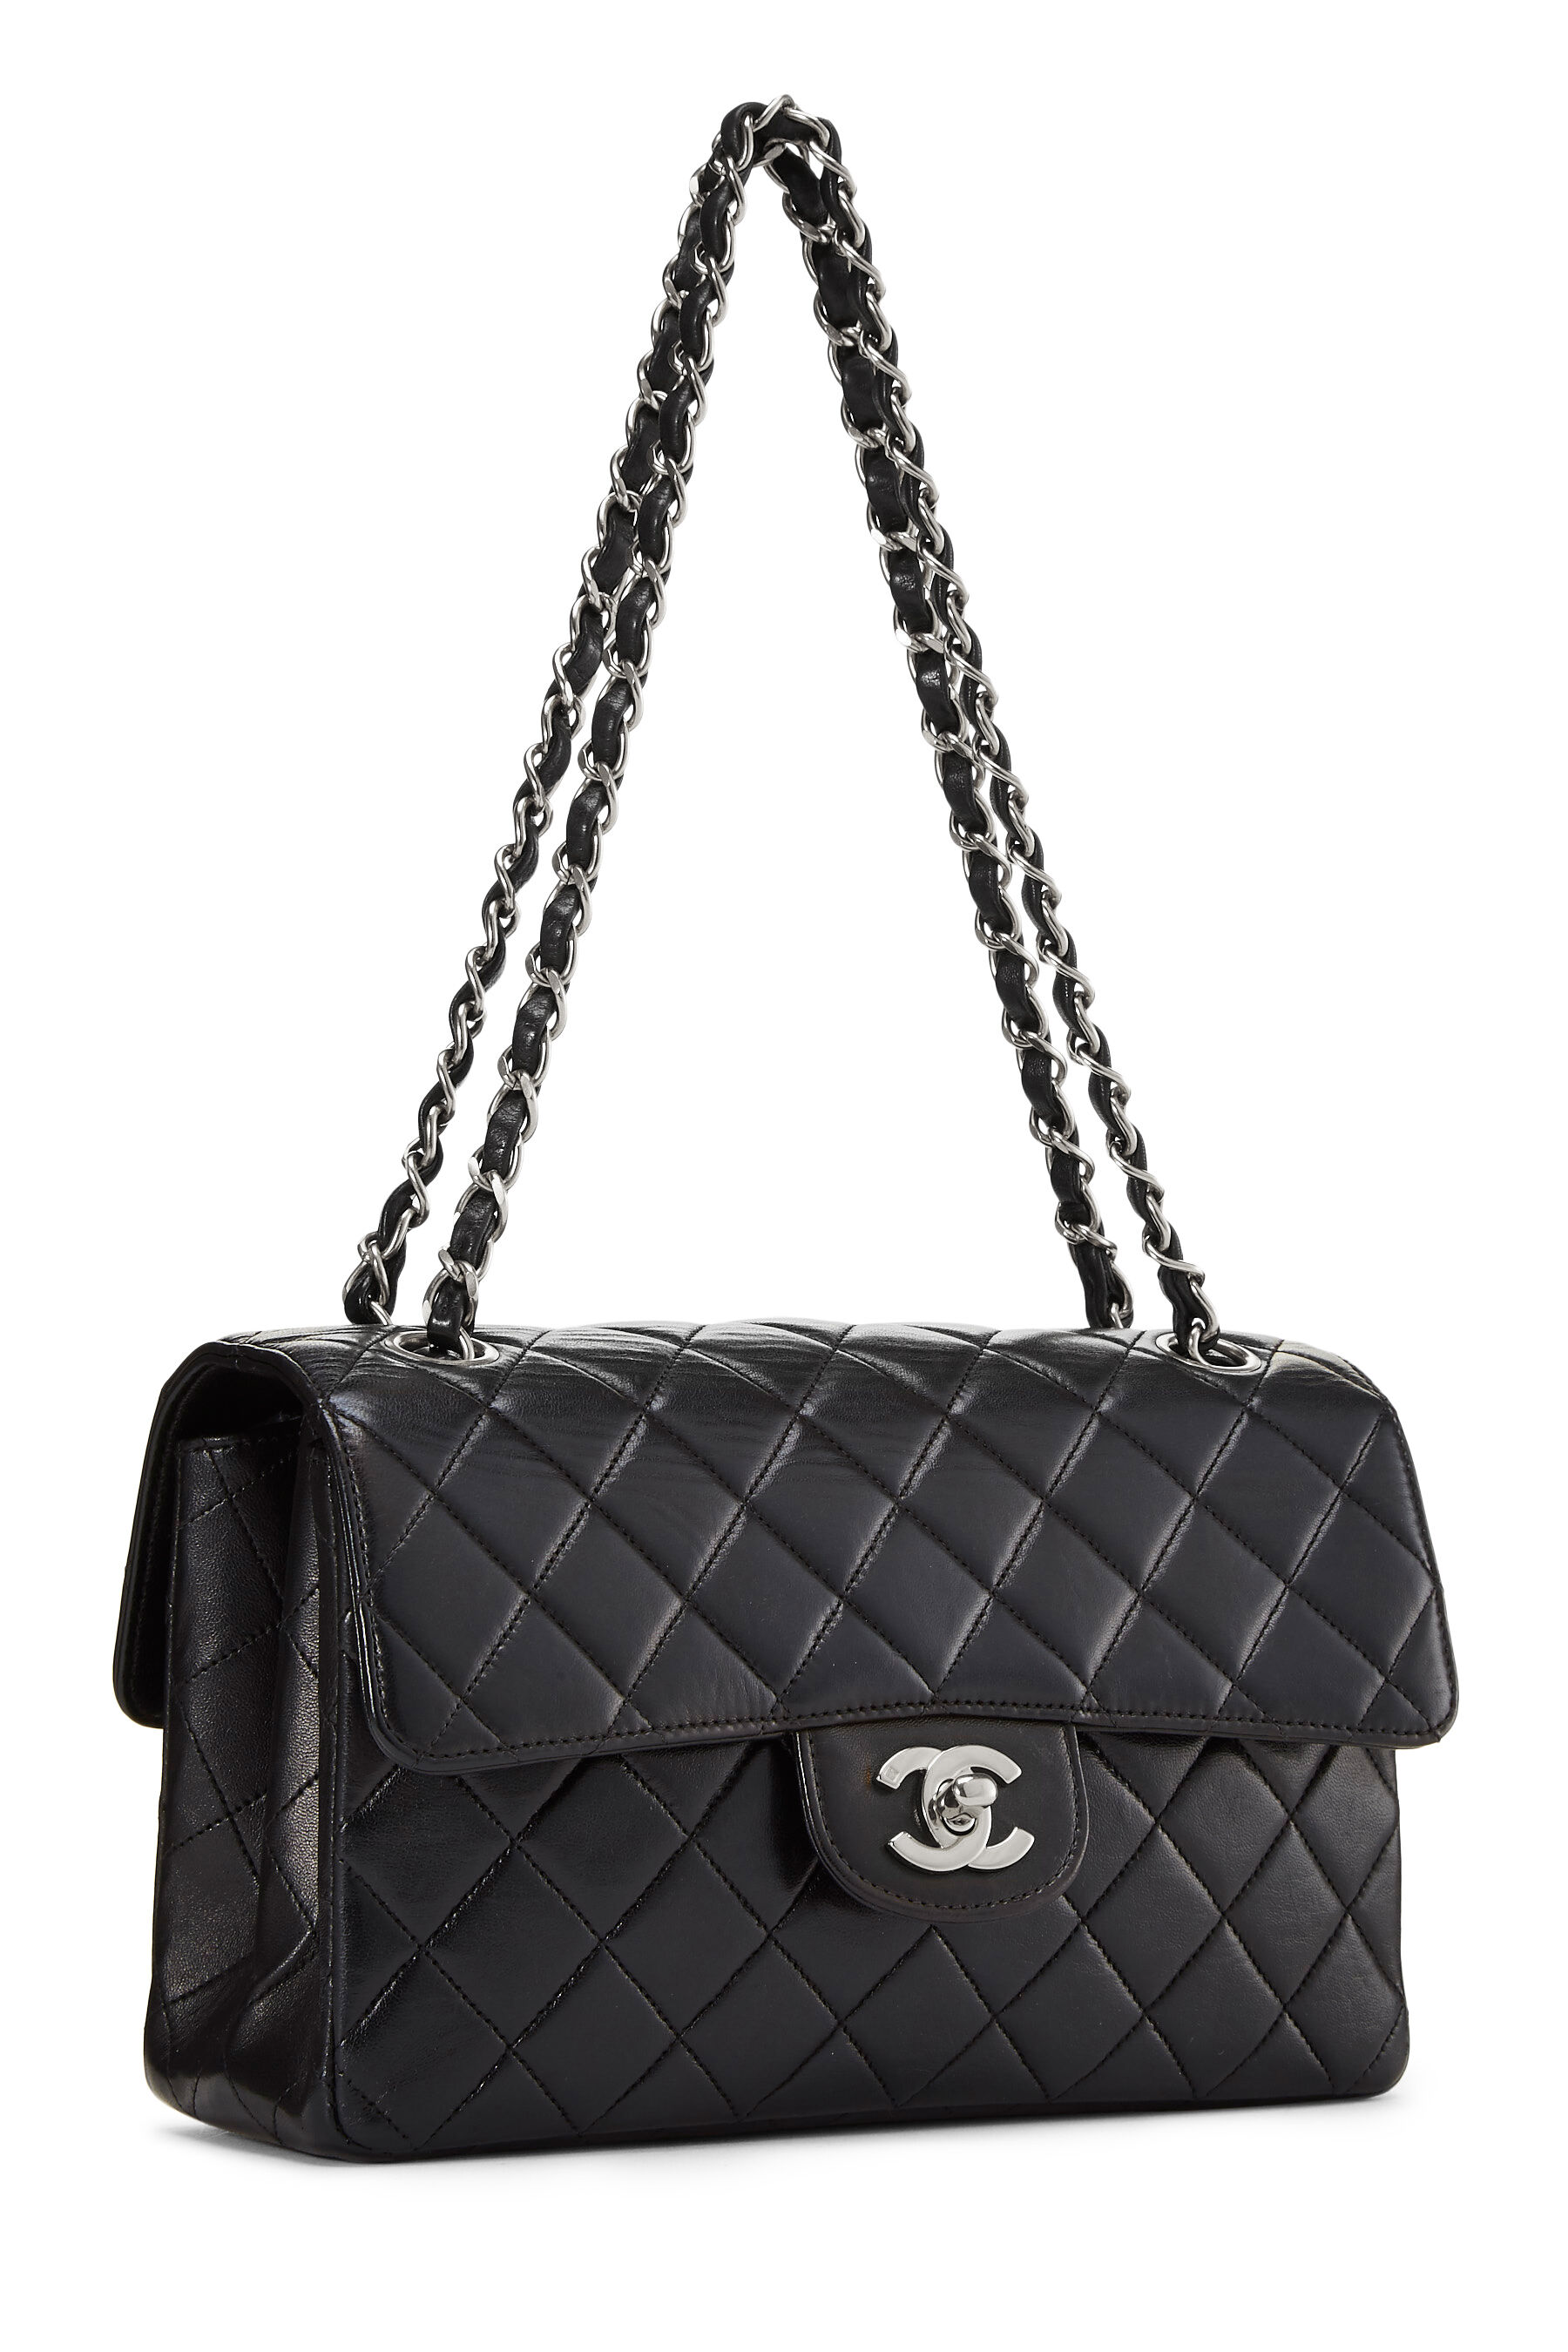 Shop Chanel Black White Bags for Women